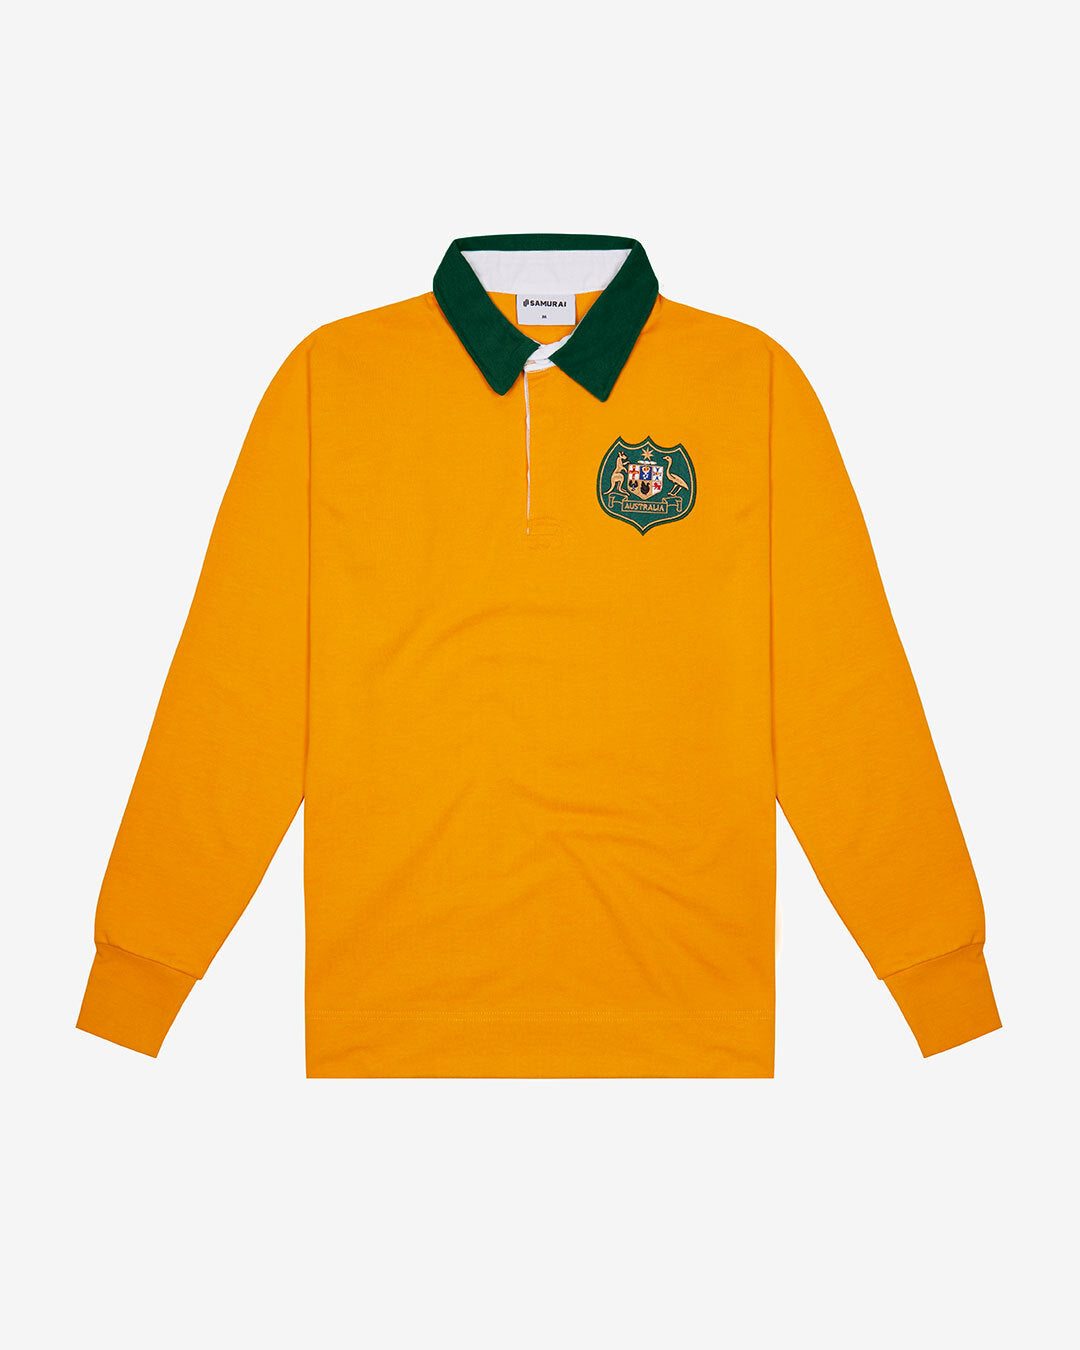 VC: AUS - Vintage Rugby Shirt - Australia